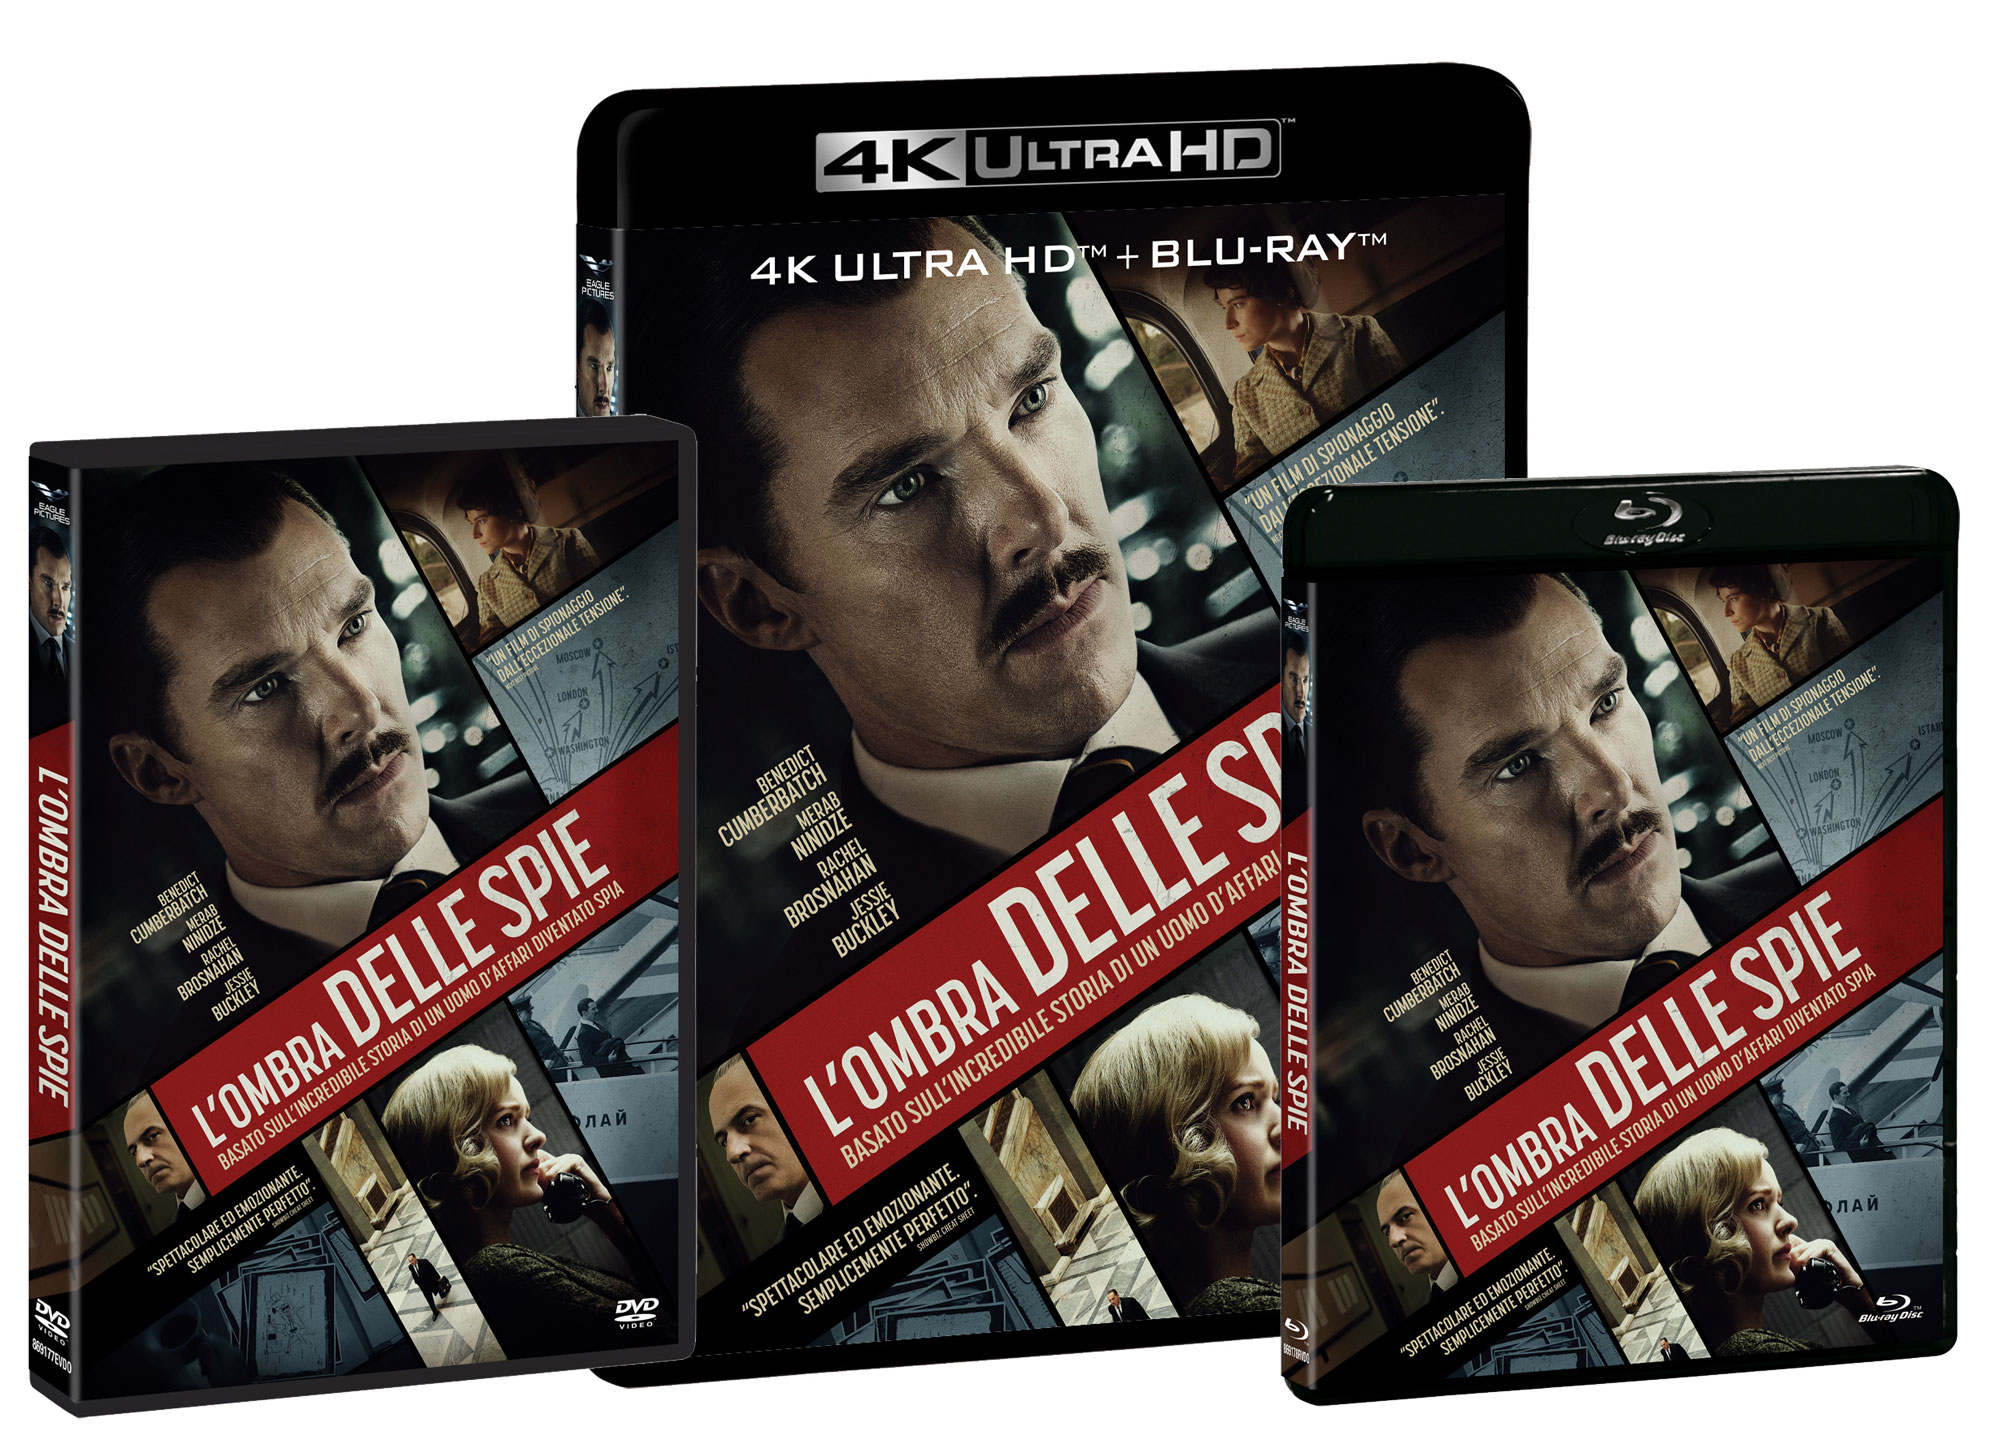 L'ombra delle spie in DVD, Blu-ray e 4K